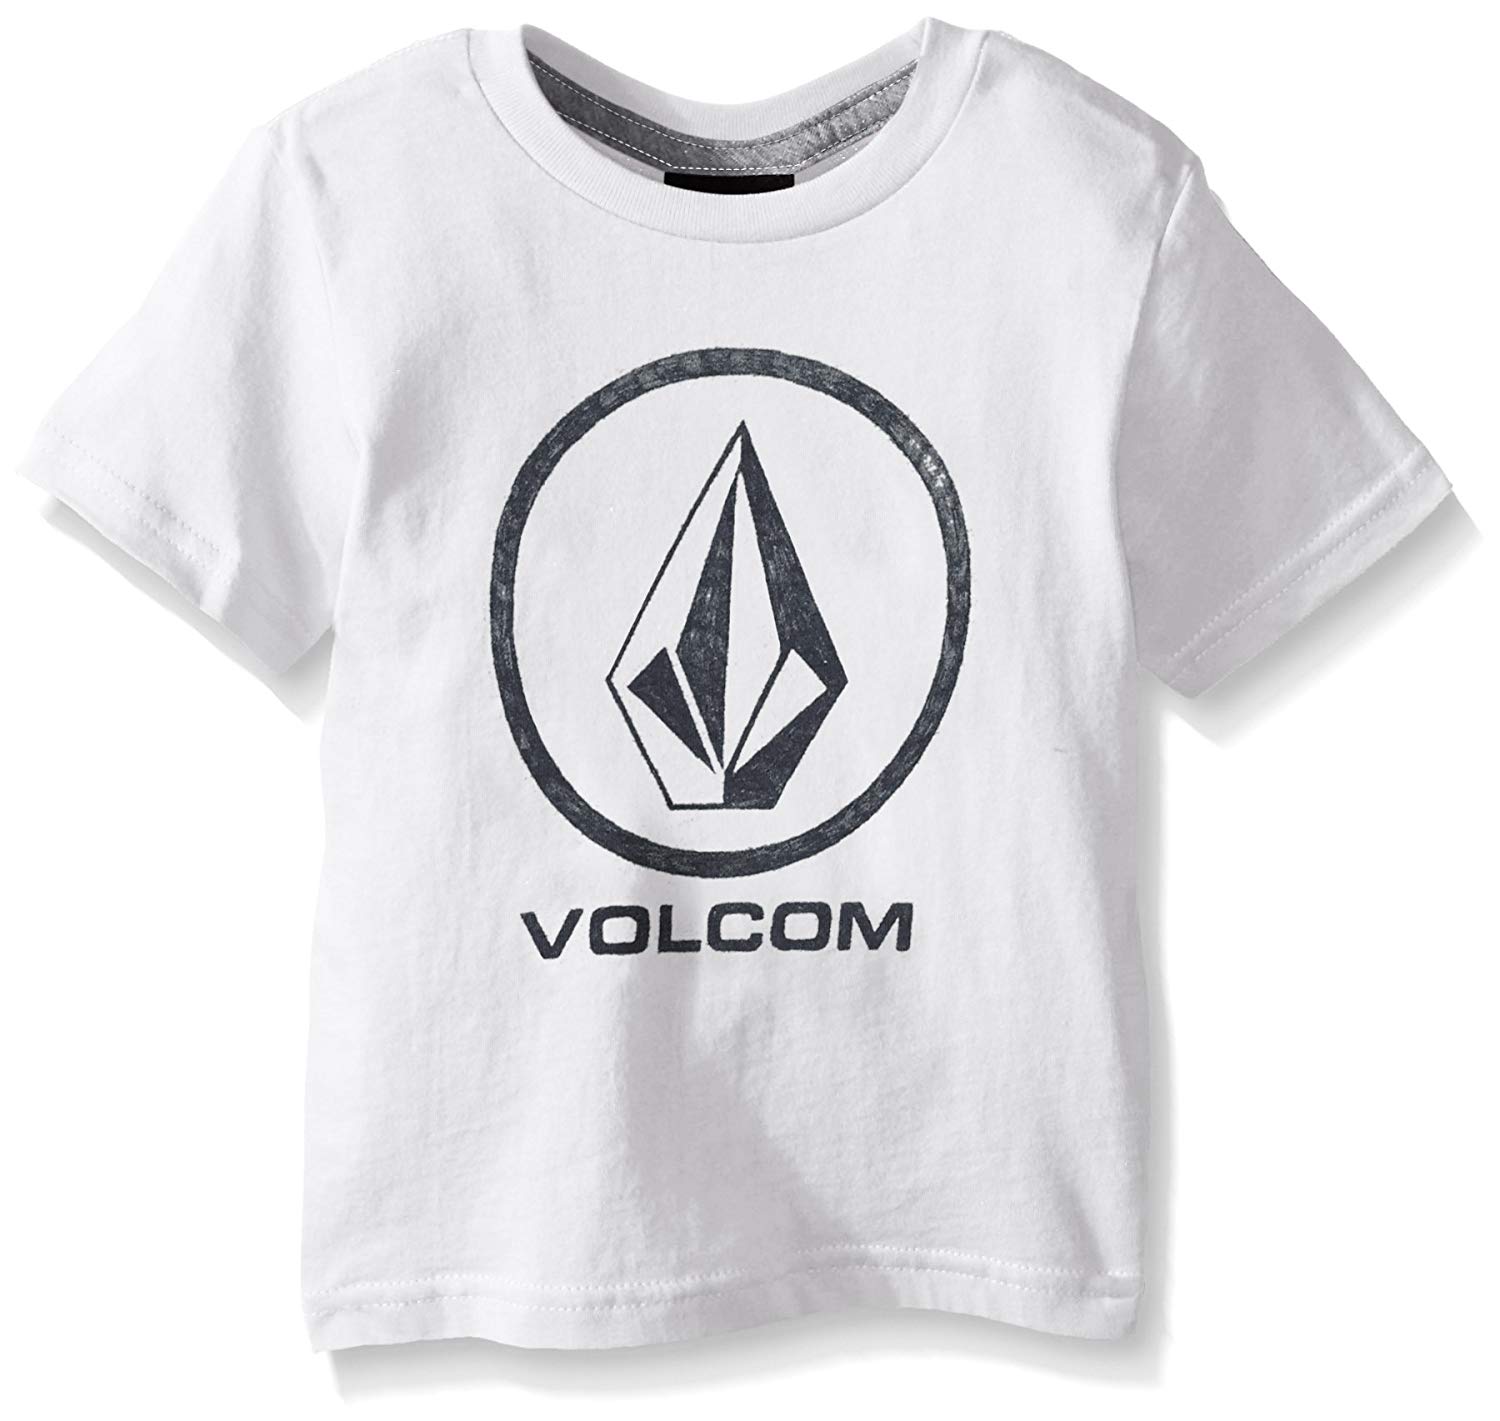 Volcom Stone Logo - Amazon.com: Volcom Boys' Stone Logo Branded T-Shirts: Clothing